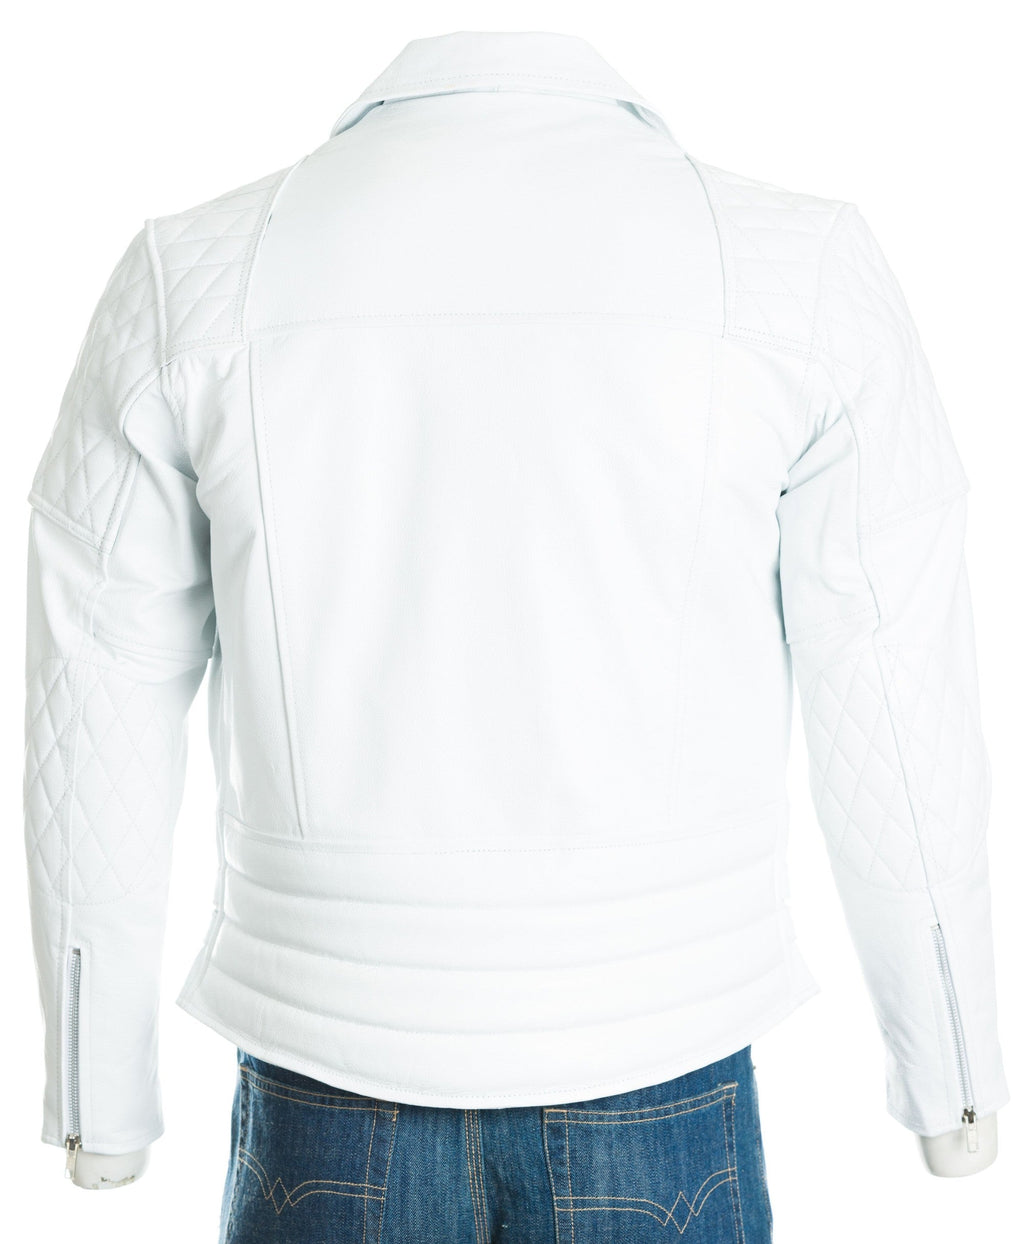 Men's White Cow Hide Leather Biker Jacket With Diamond Stitch Shoulder Detail: Lorenzo